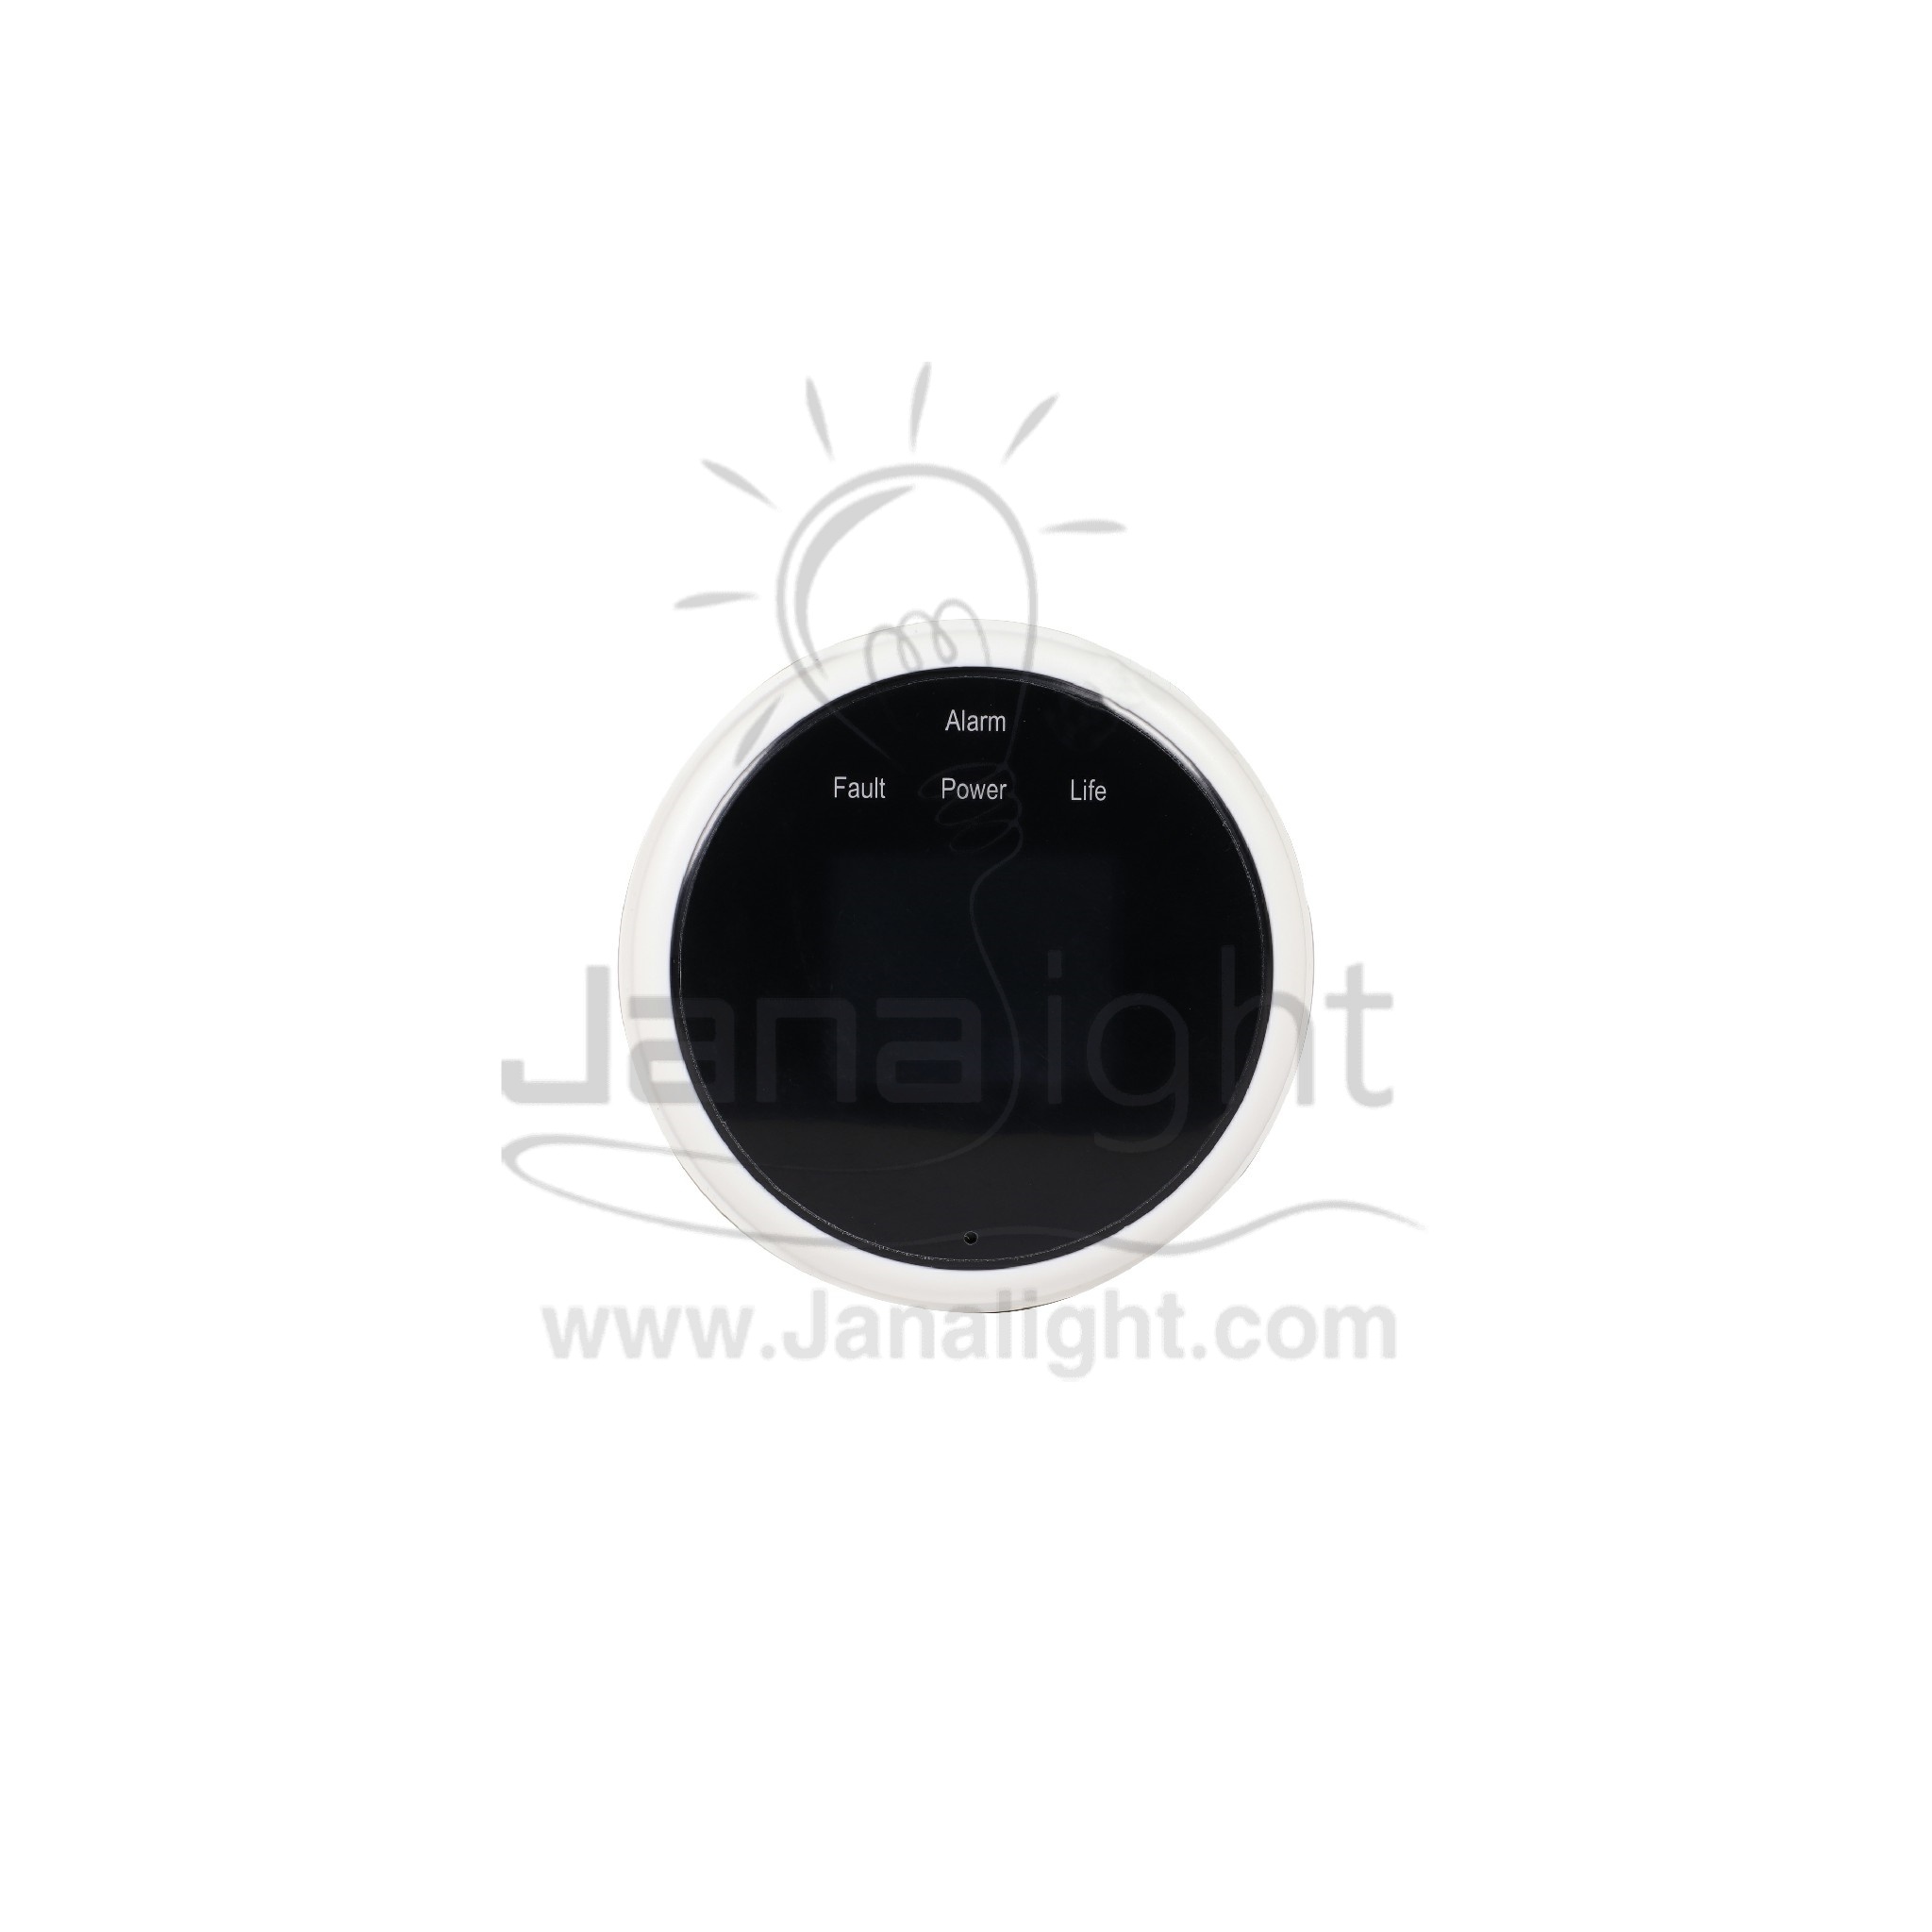 حساس درجة الحرارة و غاز سمارت هوم موري smart wifi lcd display temperature and natural gas sensor round shape mori